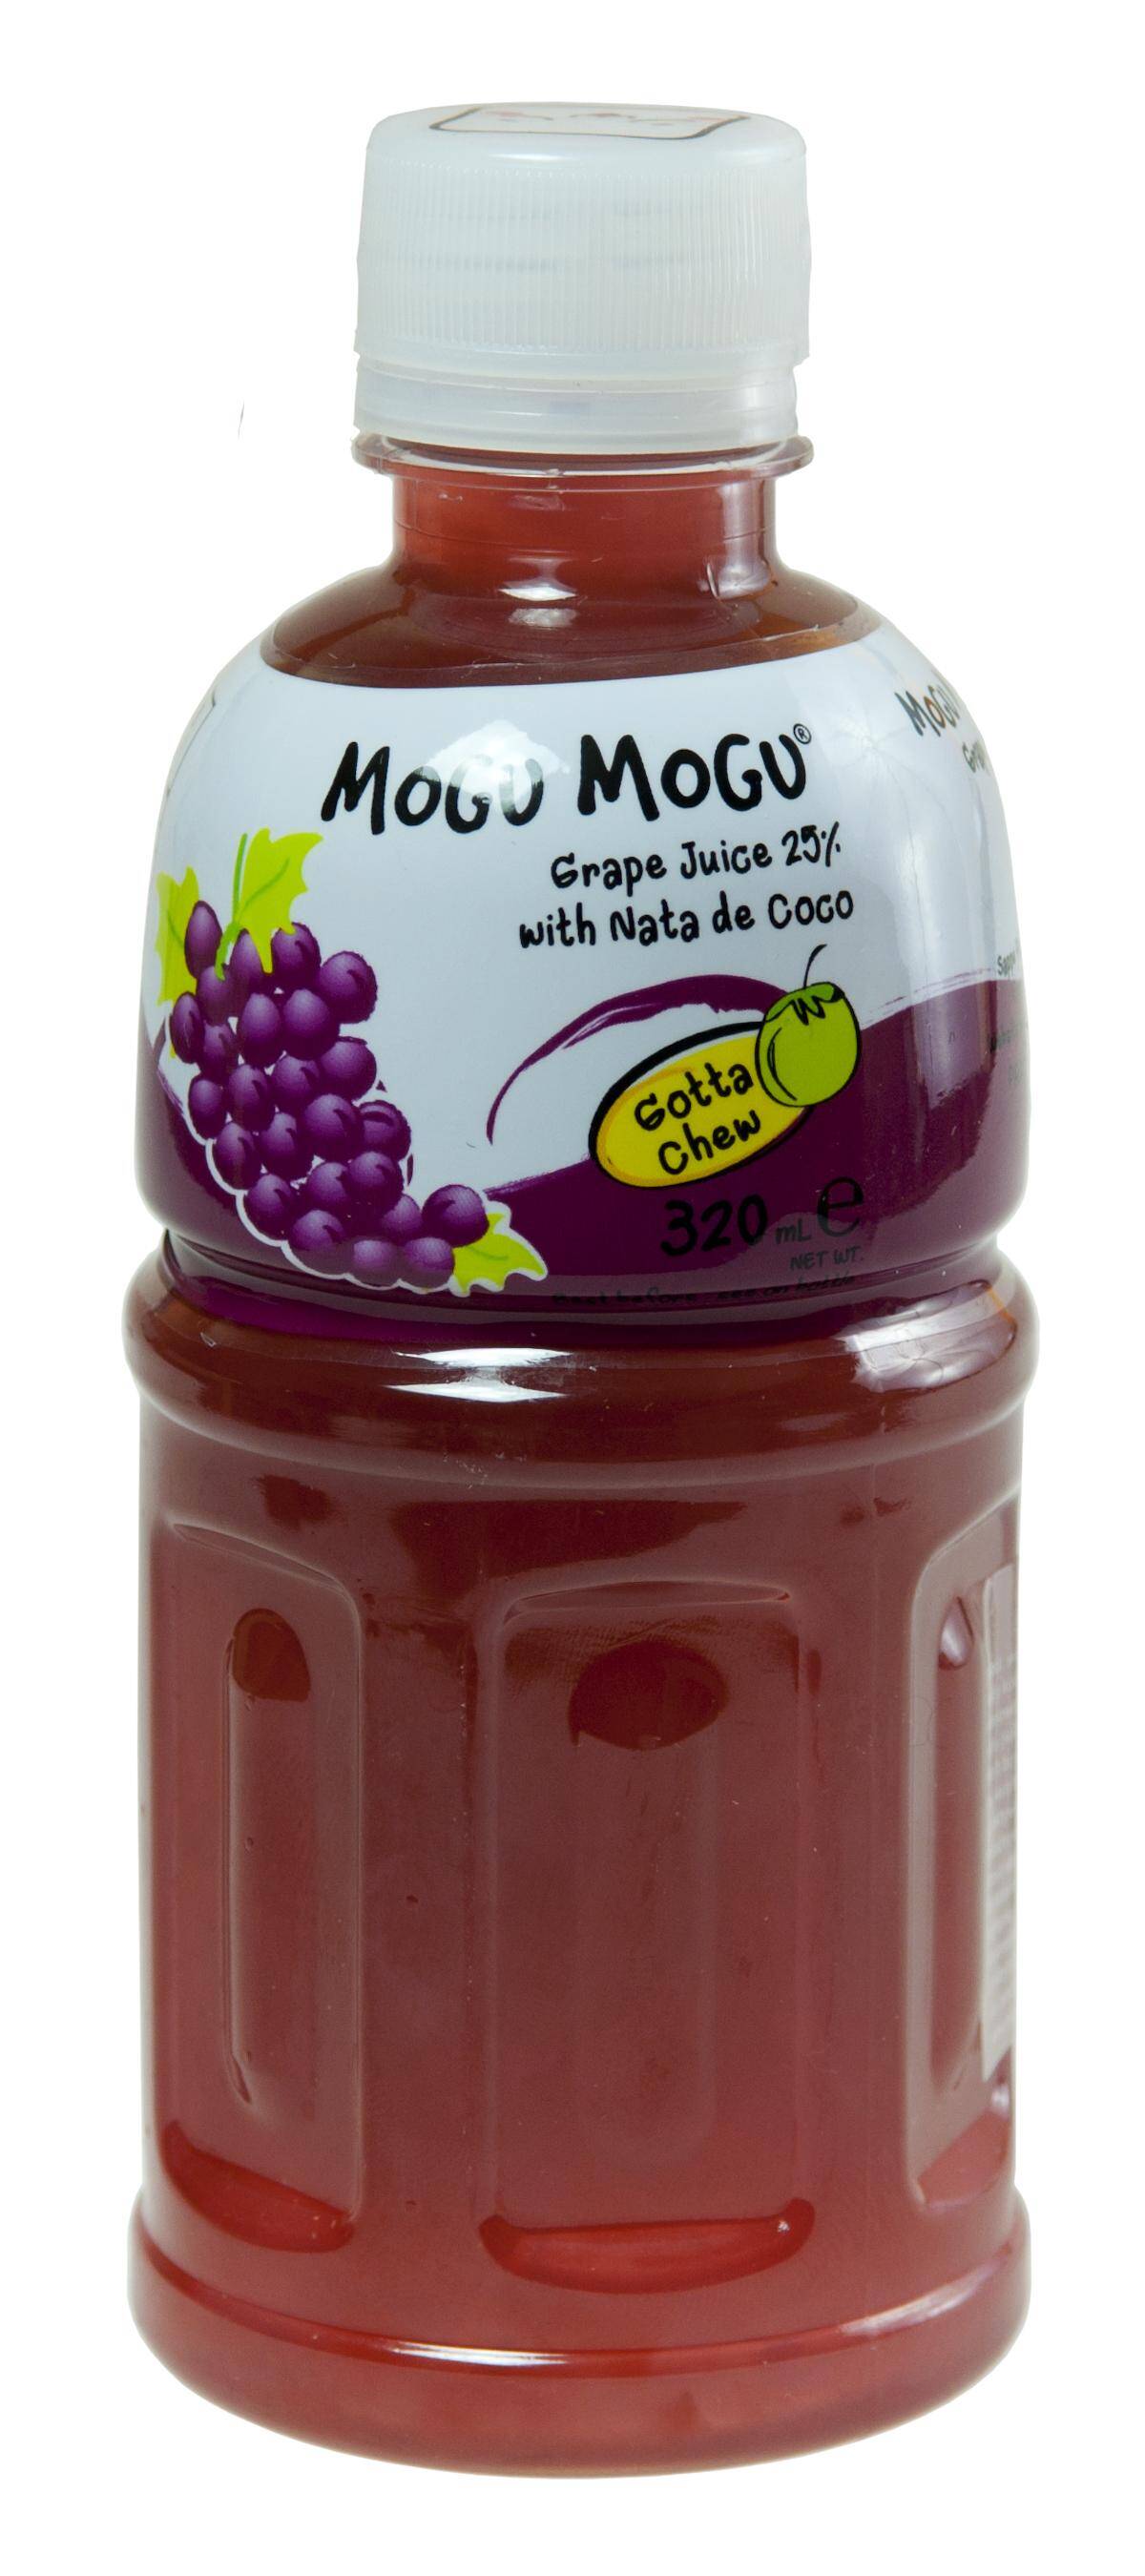 Mogu Mogu Winogronowy nata de coco 320ml/24